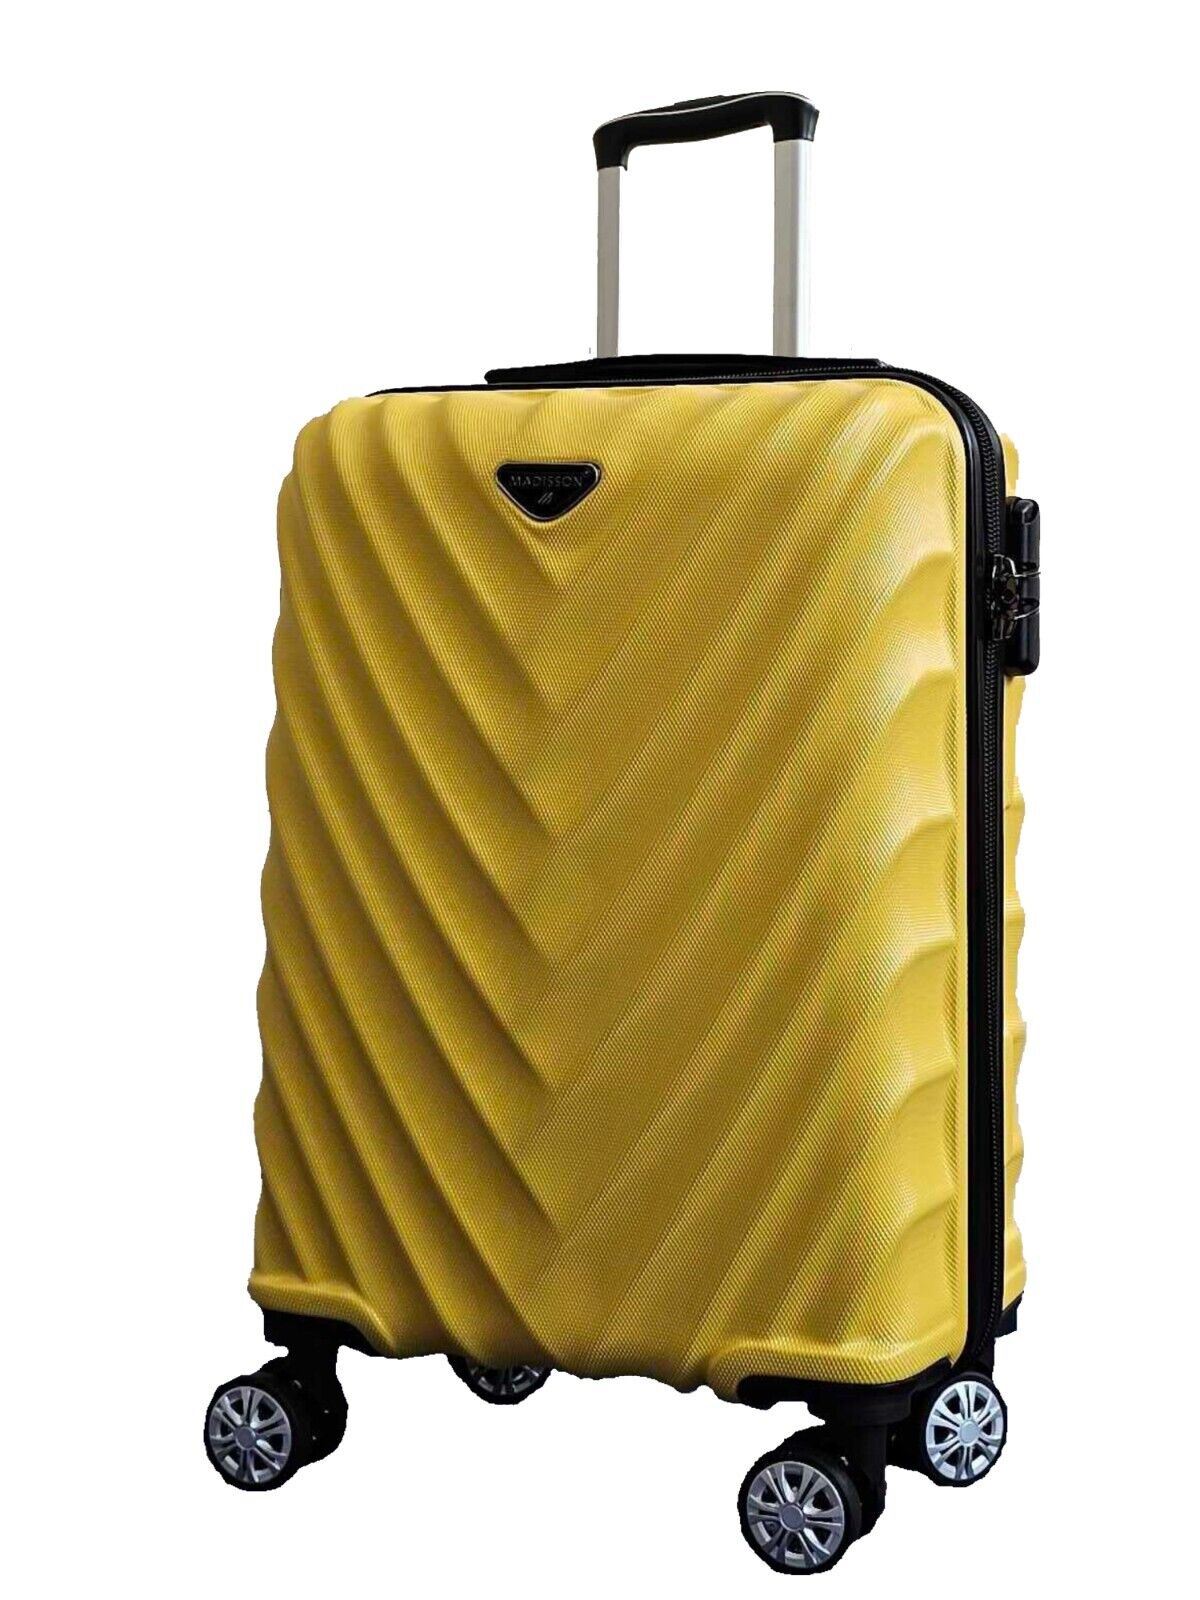 Chatom Medium Hard Shell Suitcase in Yellow